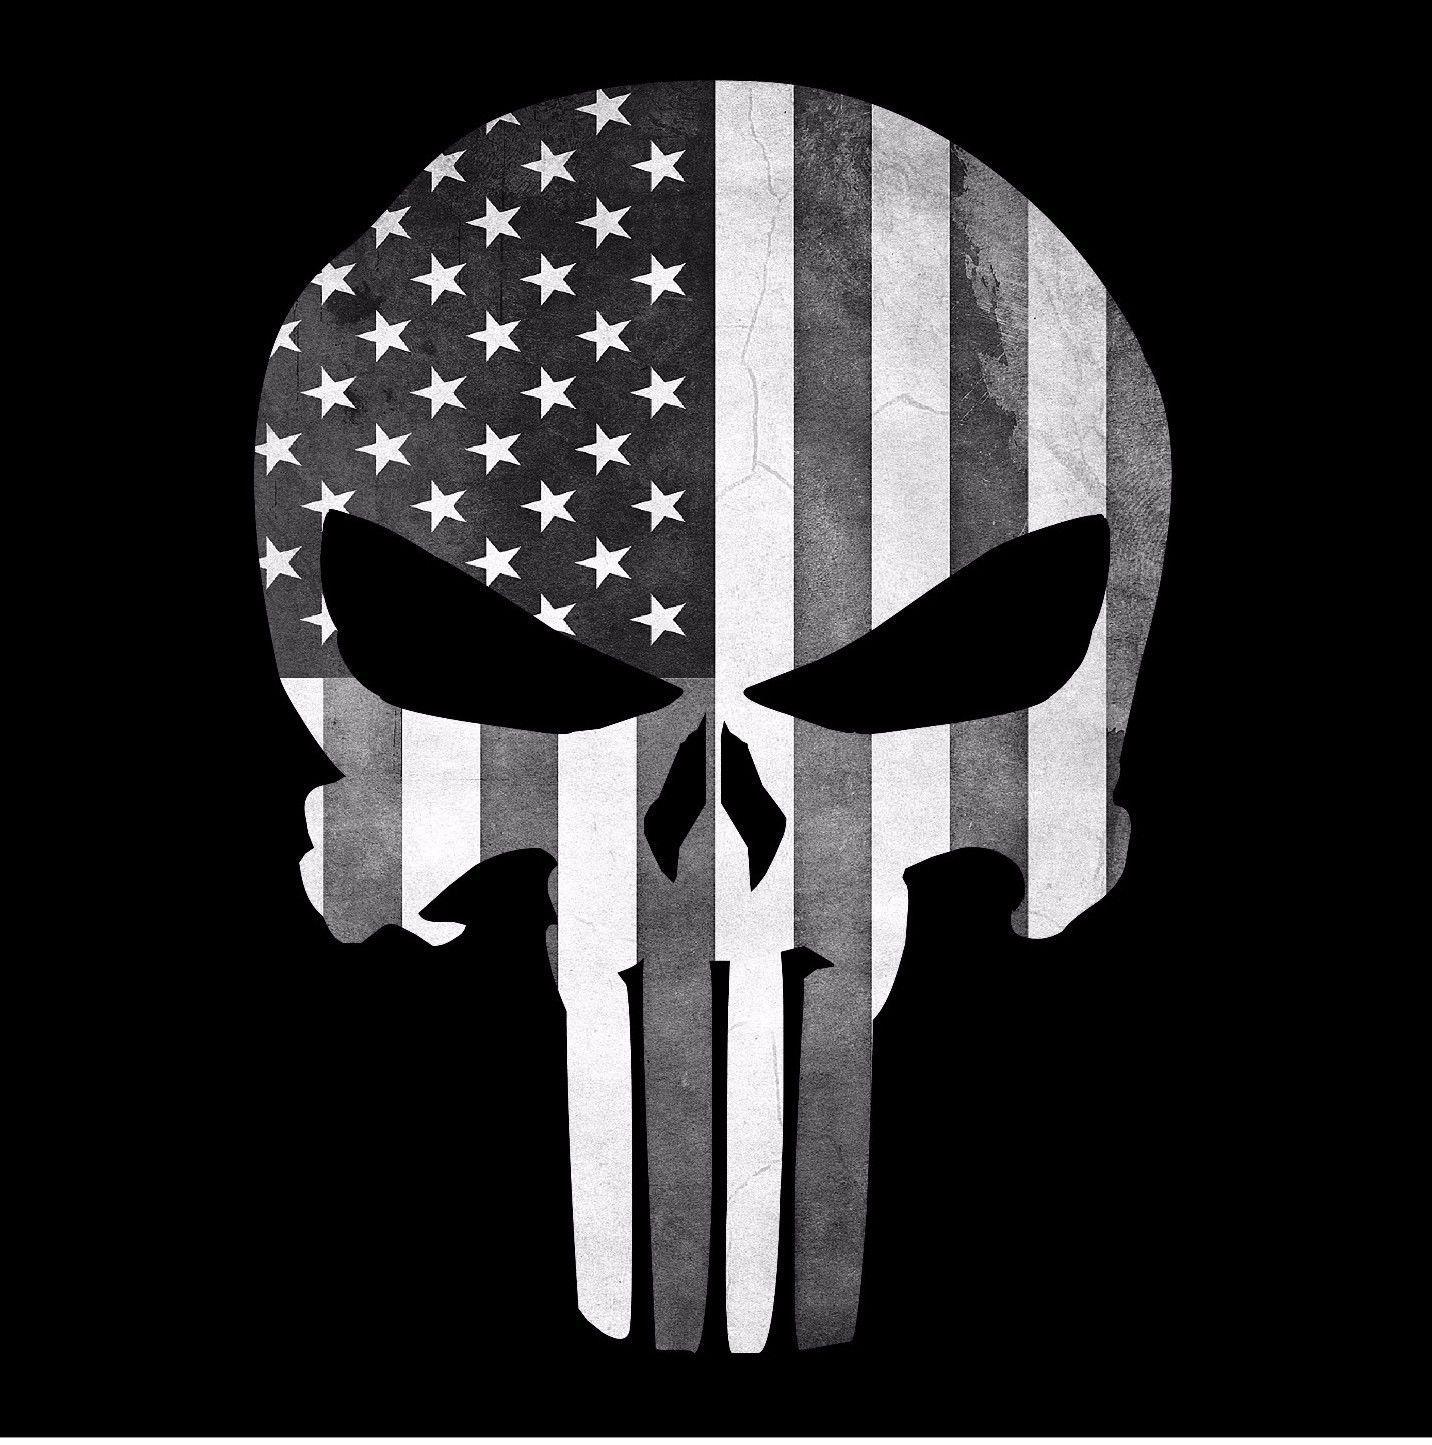 Black and White Skull Logo - Punisher Skull American Flag (Black and White) Decal Sticker Graphic